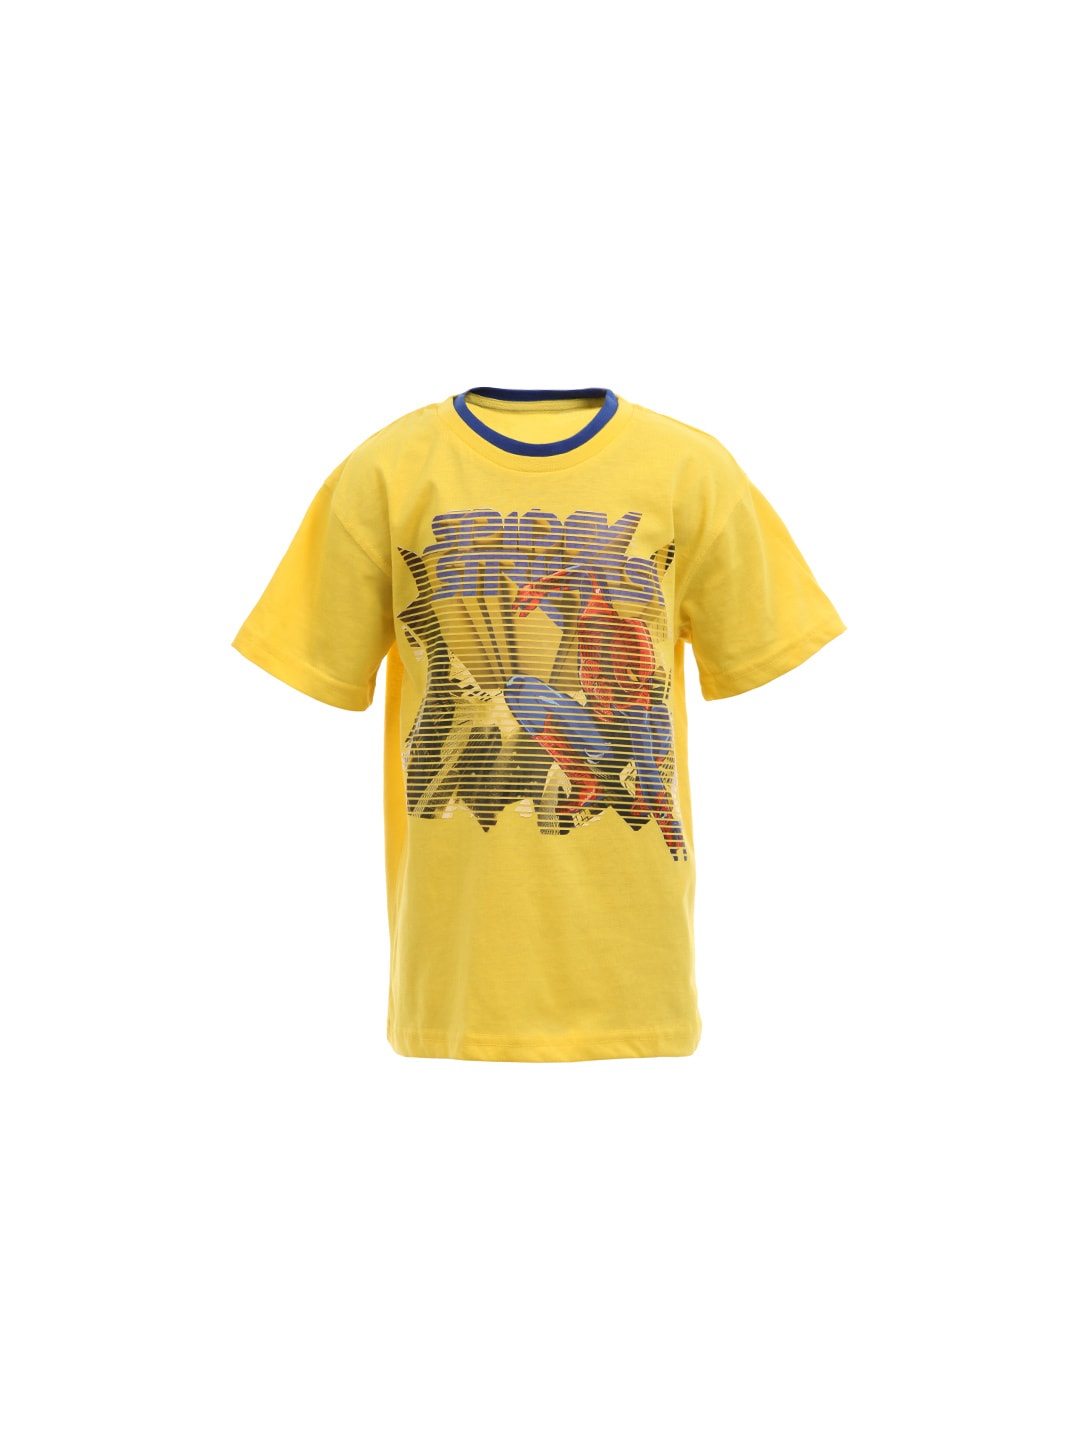 The Amazing Spiderman Boys Yellow T-shirt